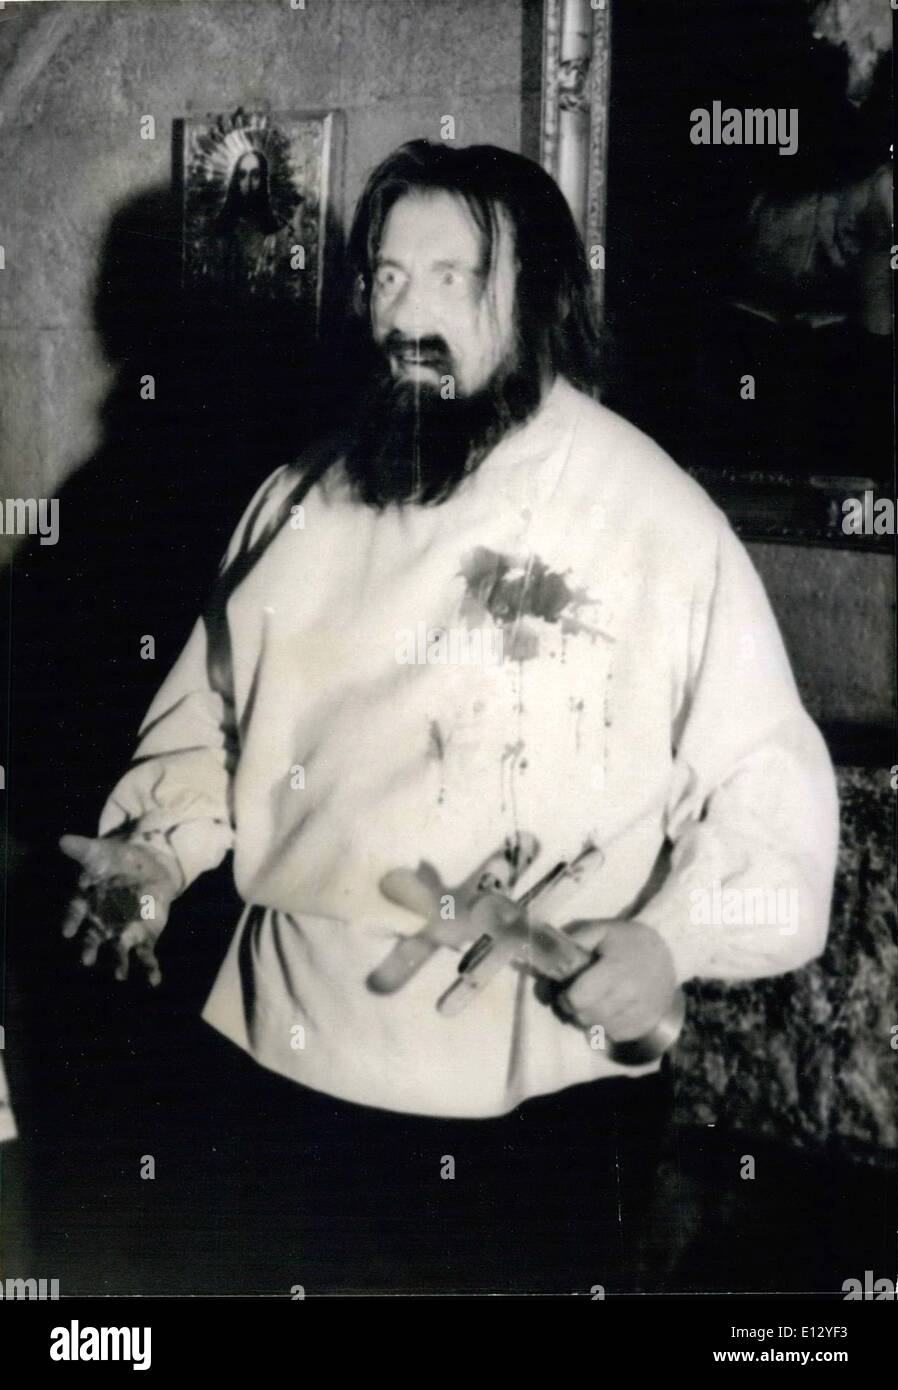 Febrero 26, 2012 - Rasputin desempeñado por Gert Froebe Foto de stock